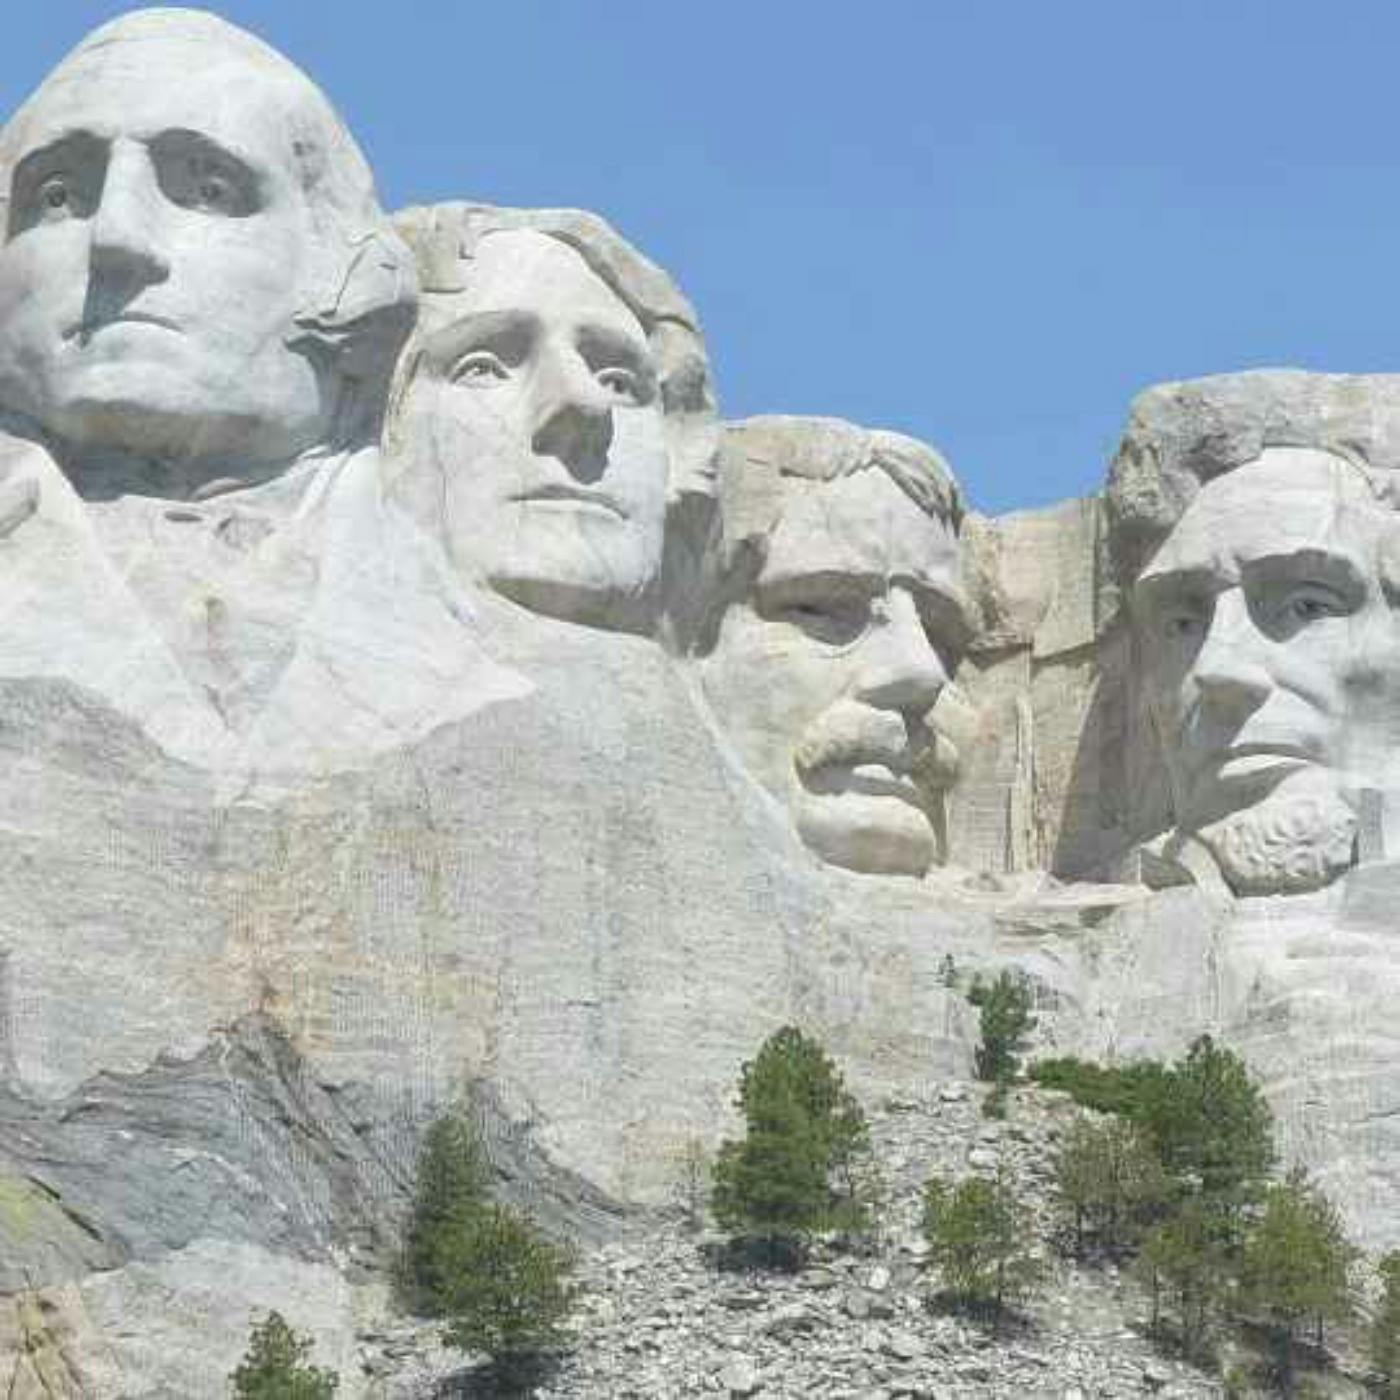 Carving Mount Rushmore